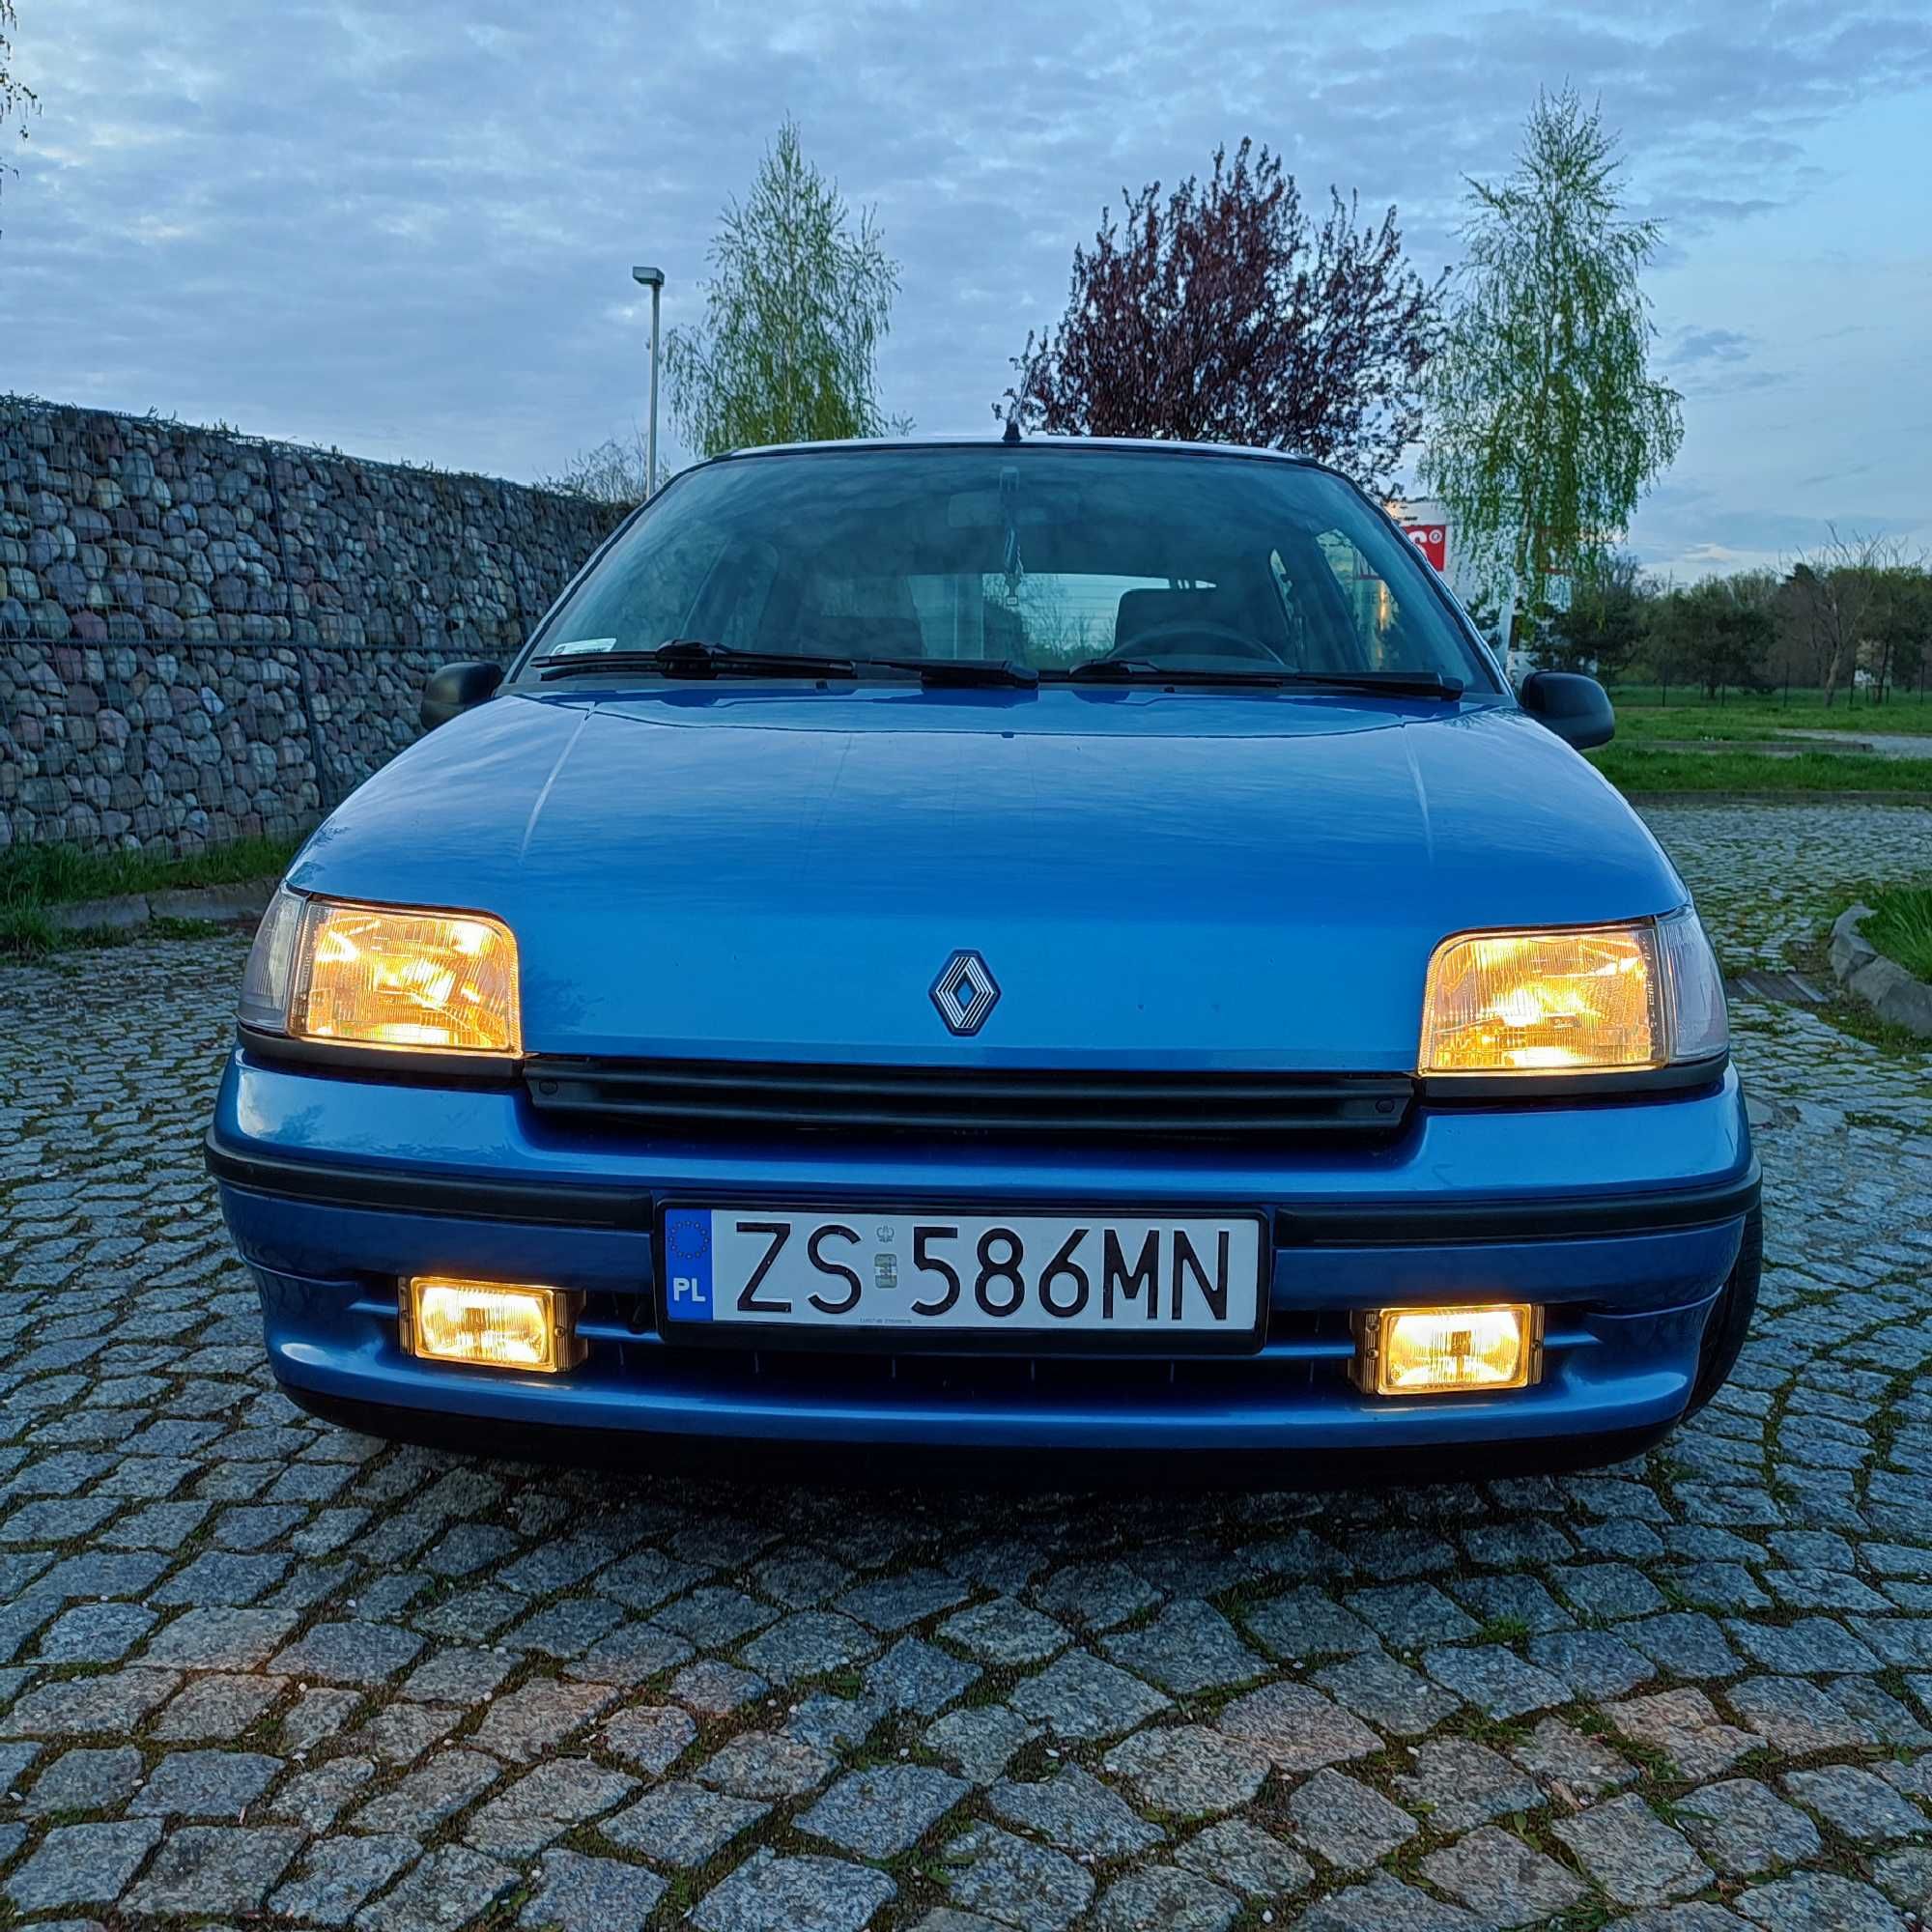 Renault Clio RT 1.8 8v ph1